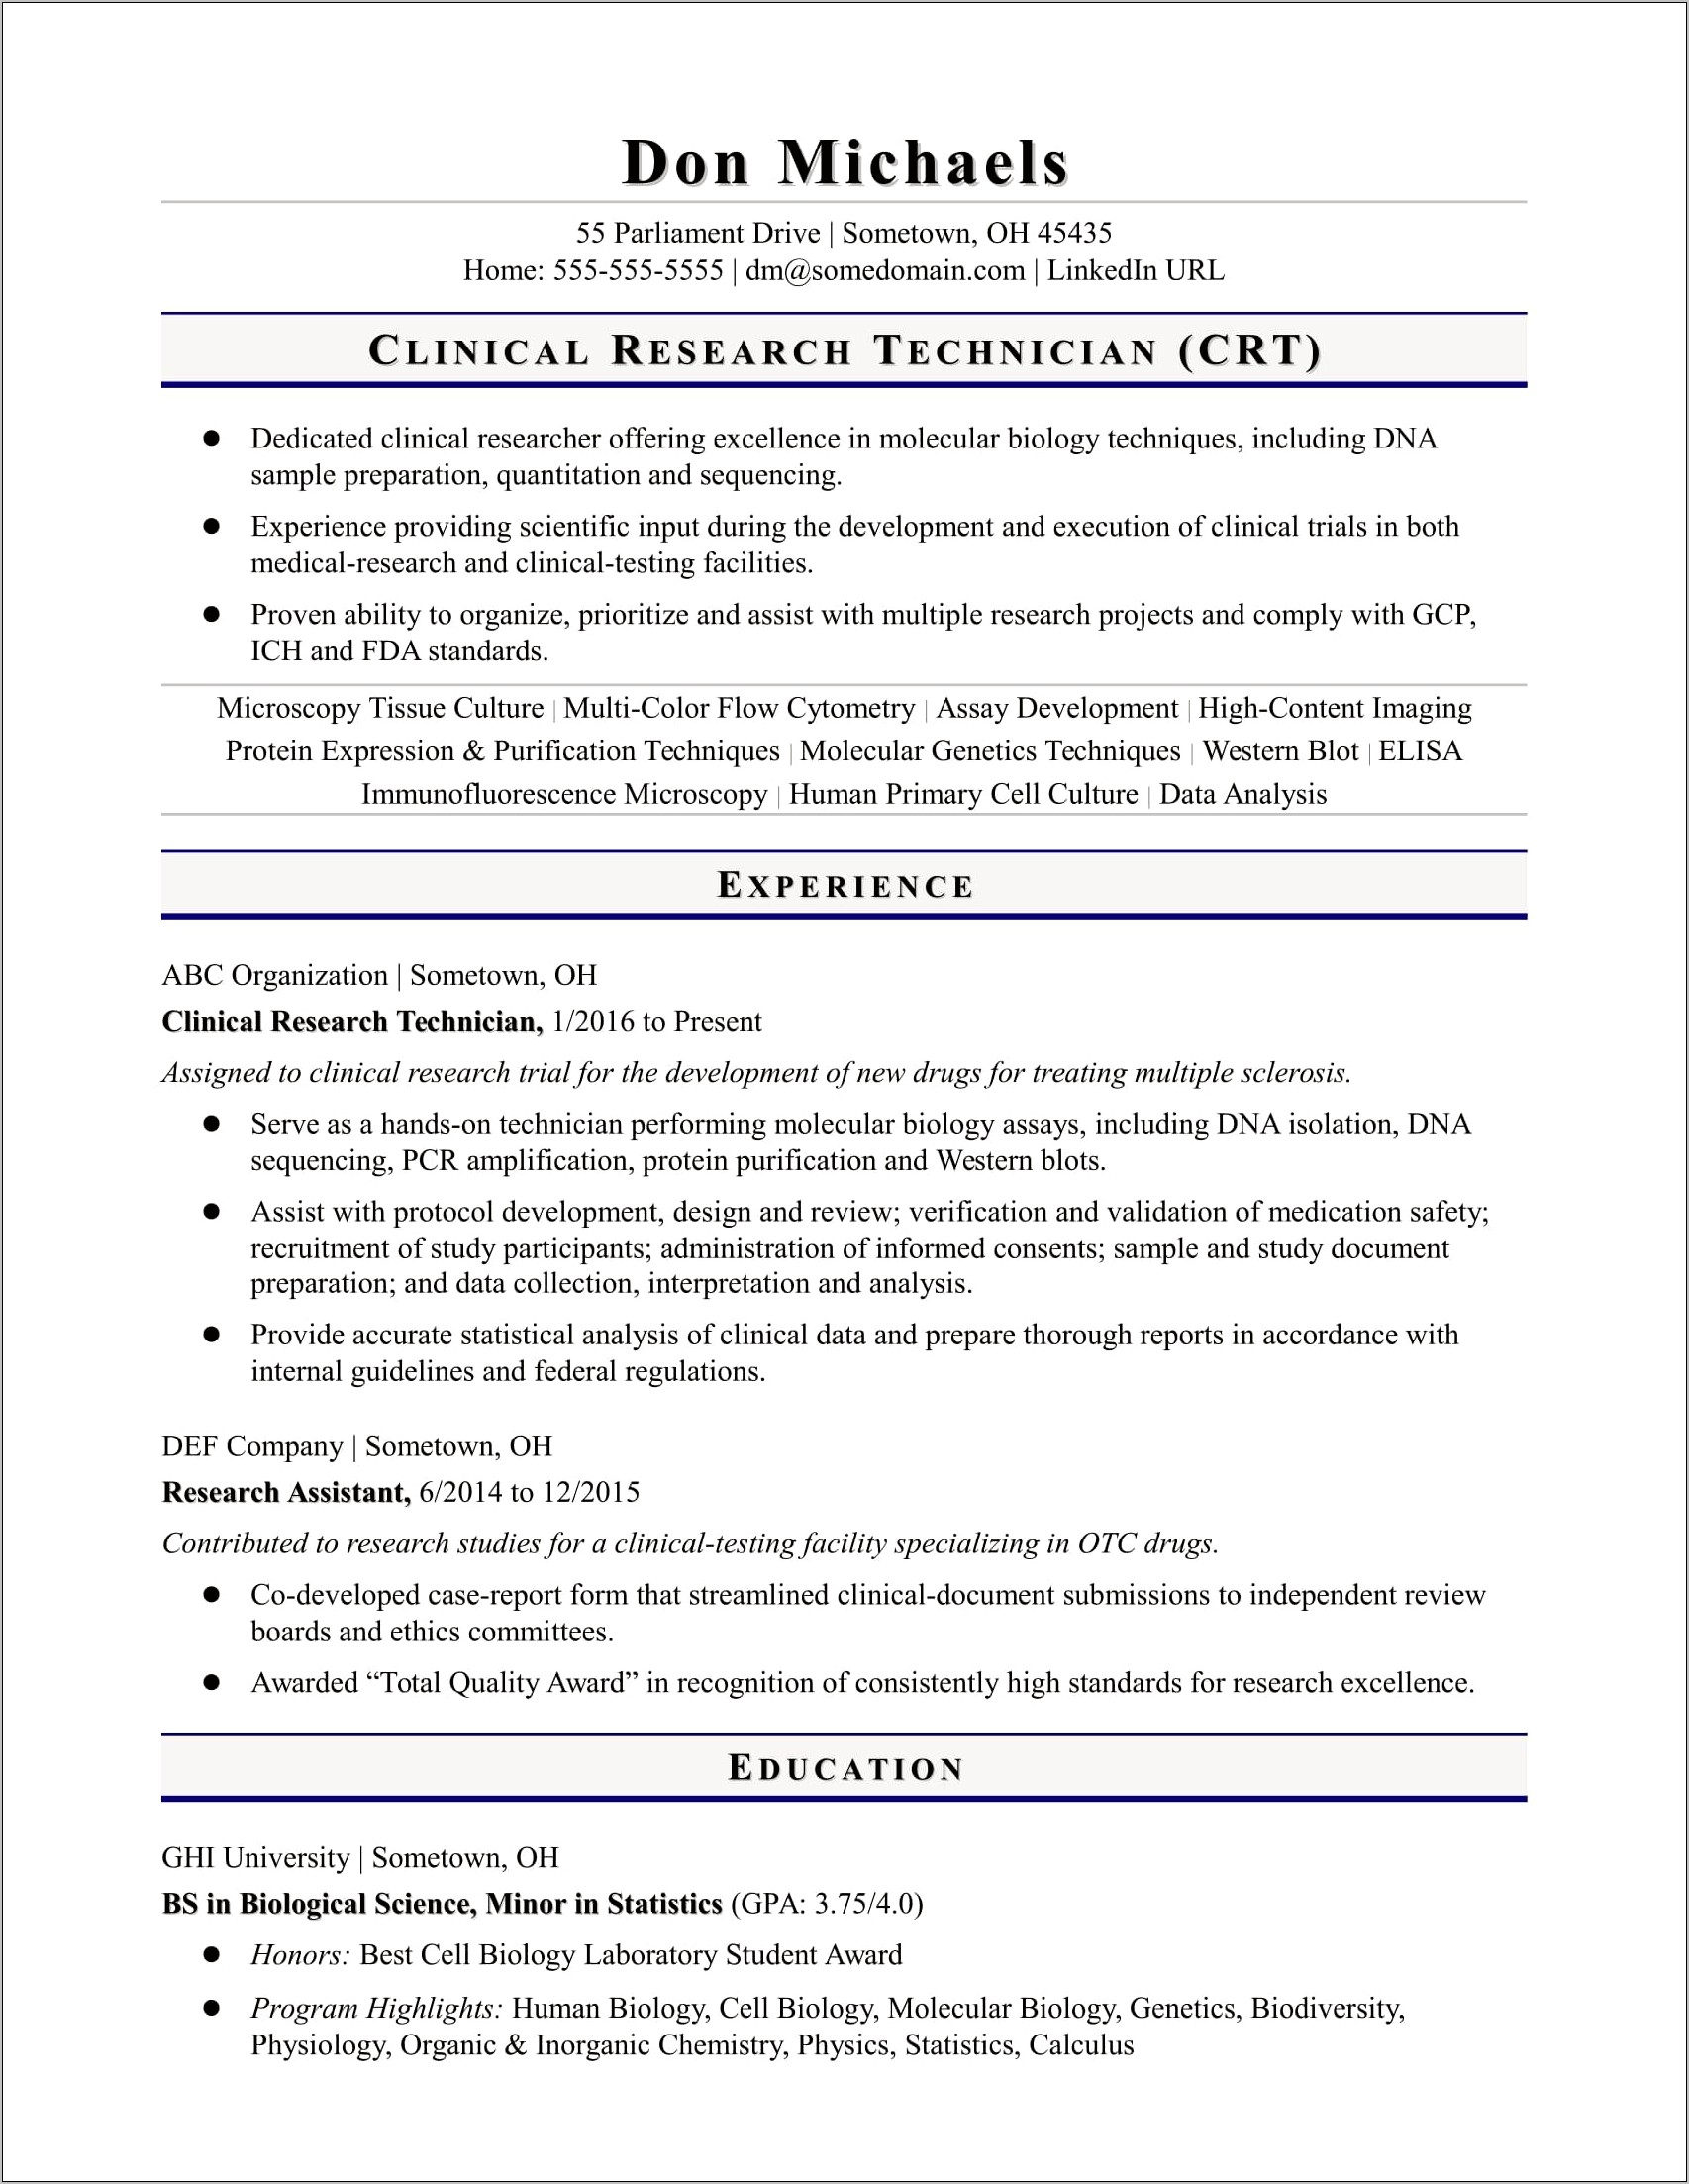 Resume Summary For Laboratory Job